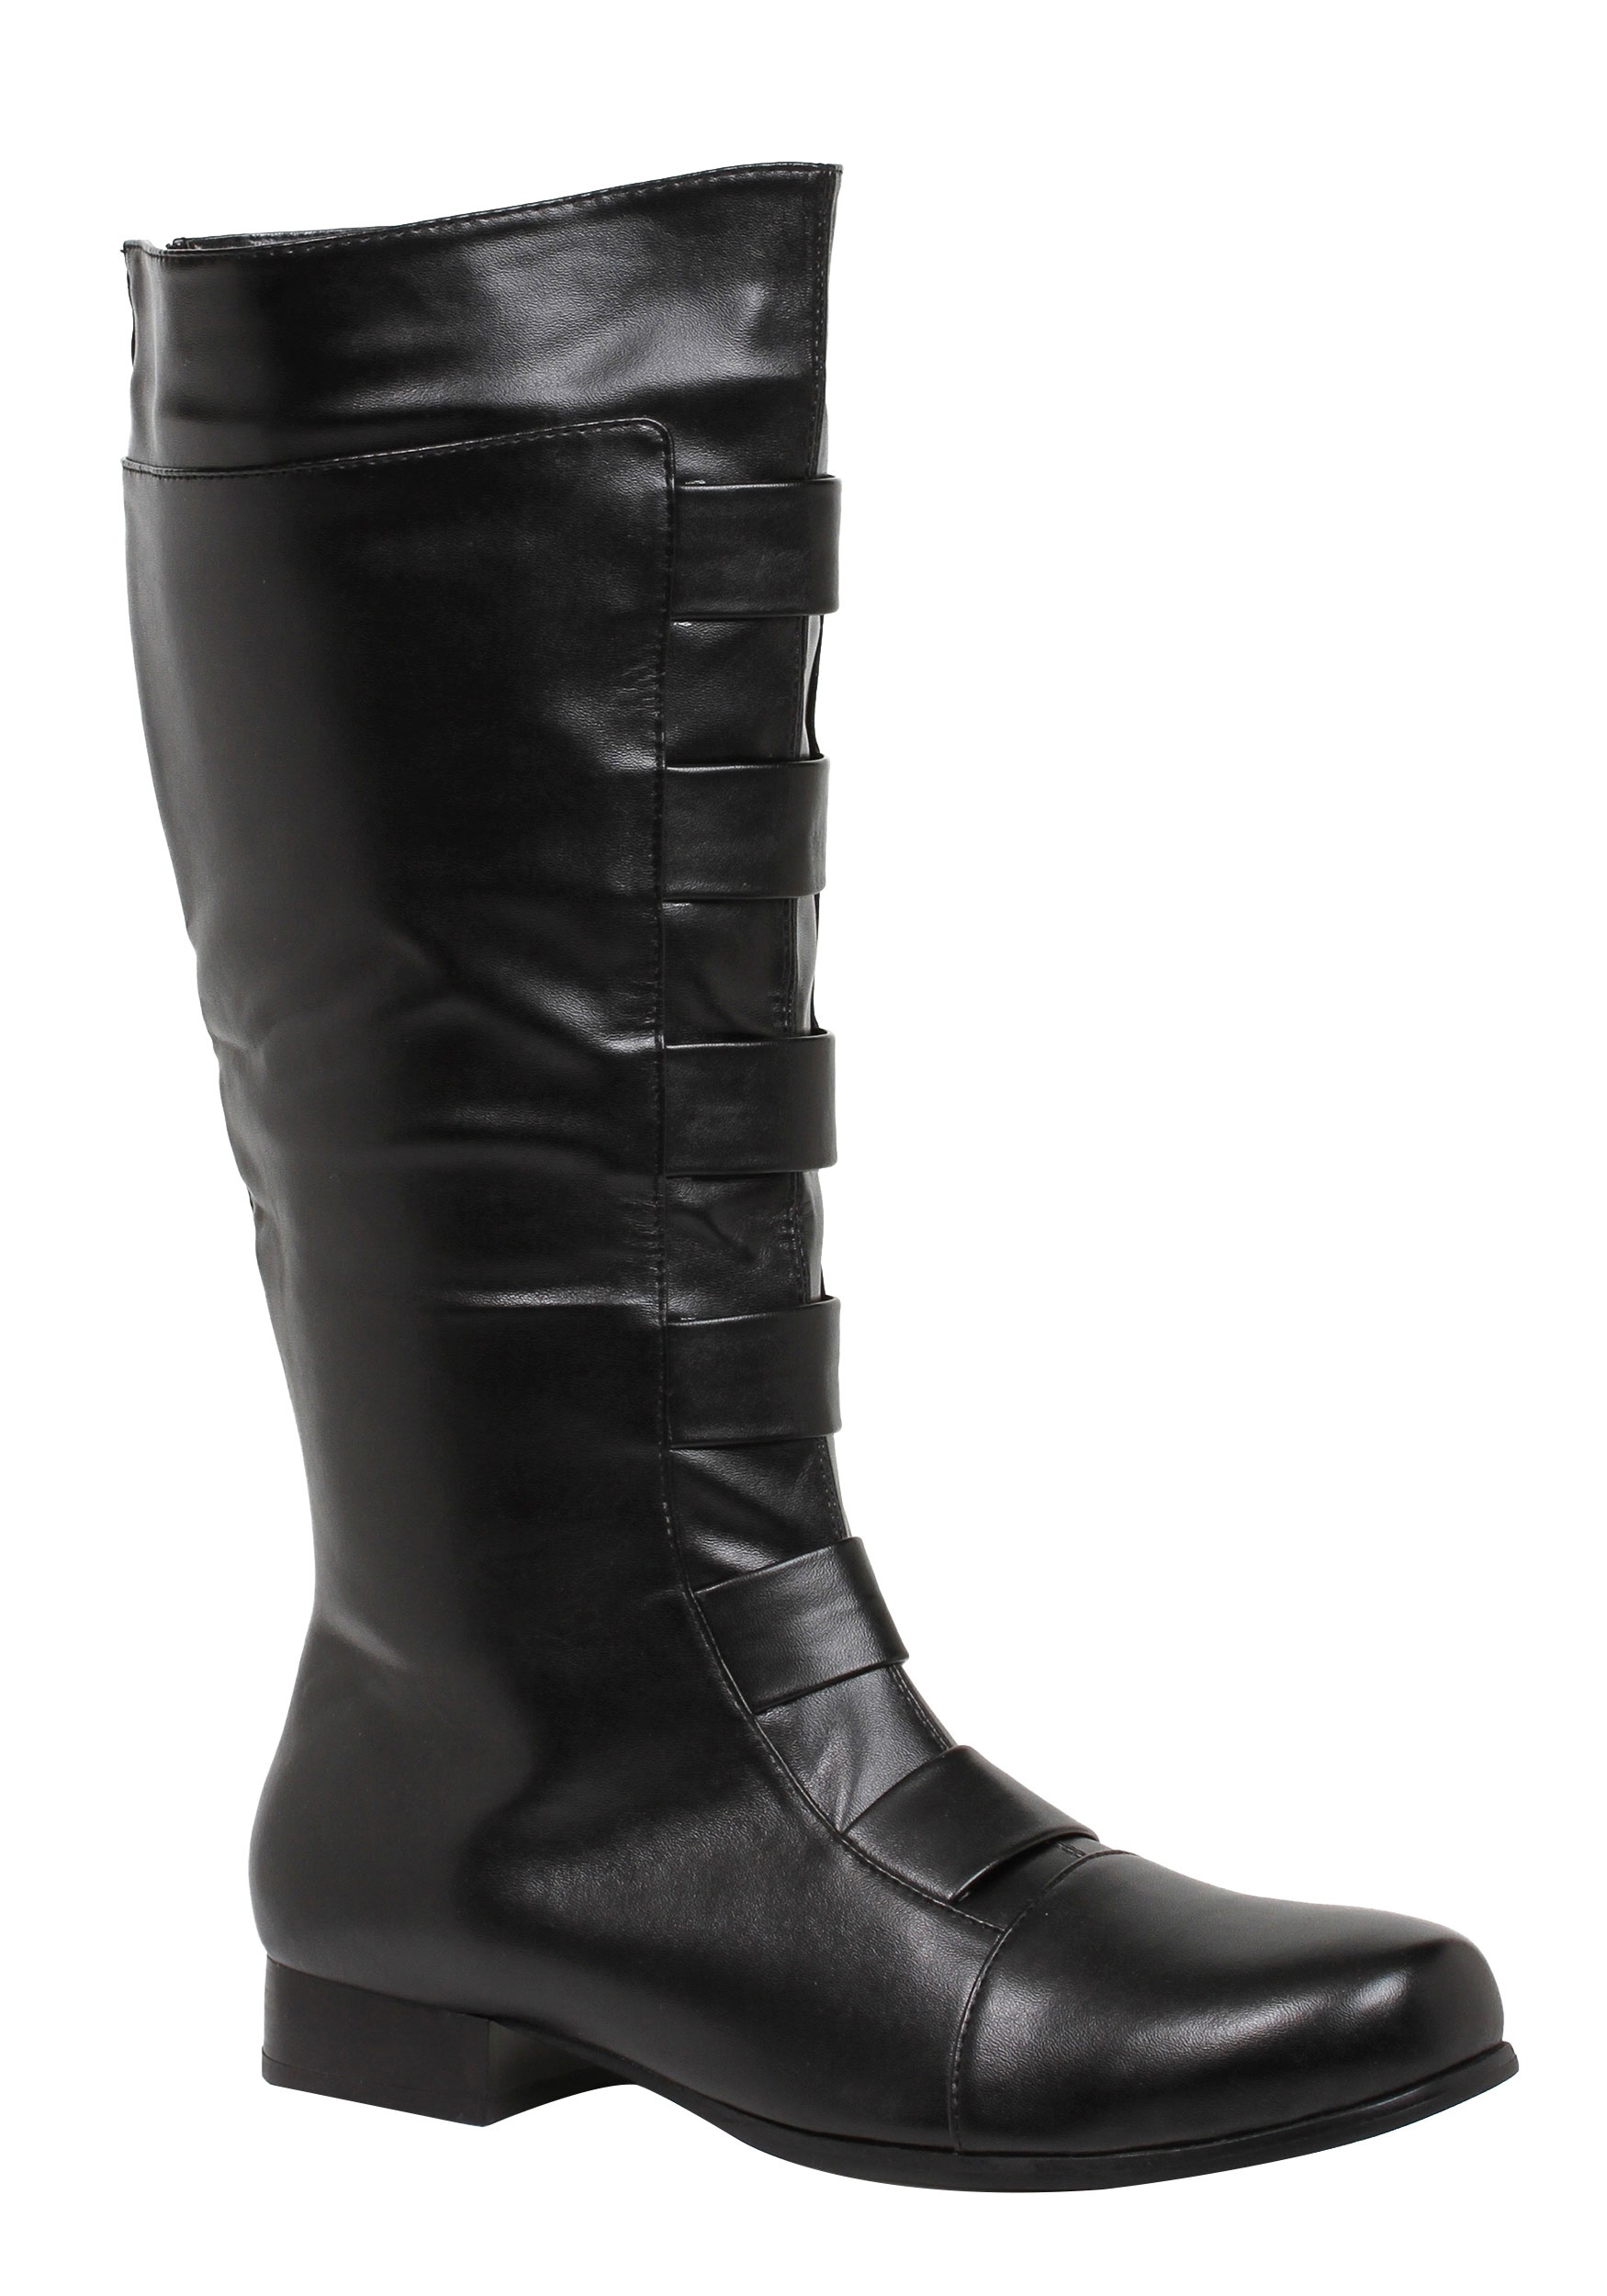 Image of Adult Black Superhero Boots | Superhero Costume Accessories ID EES121MARCBK-L